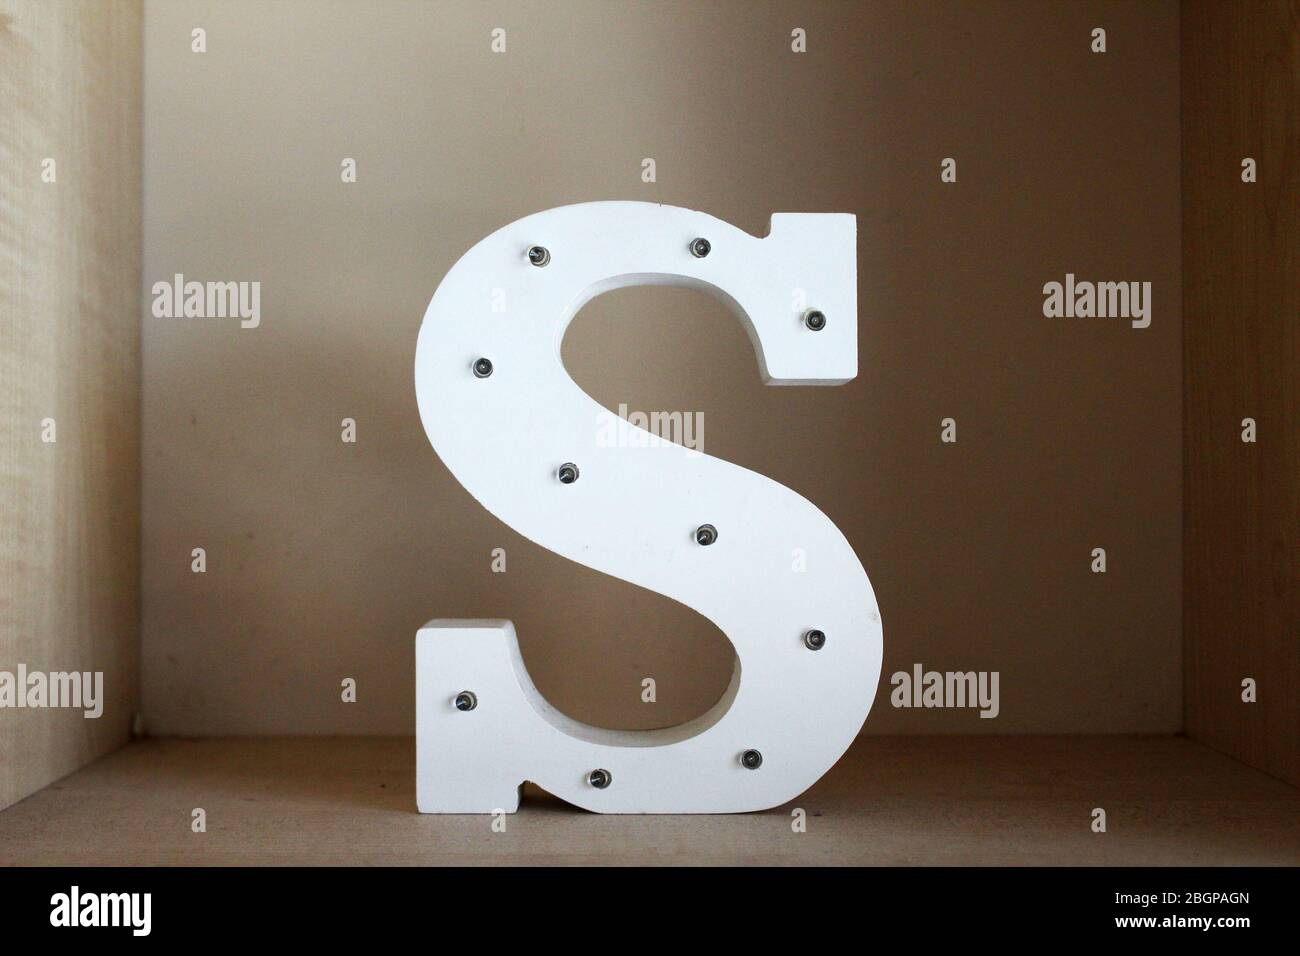 Big, decorative letter 'S' on a shelf Stock Photo